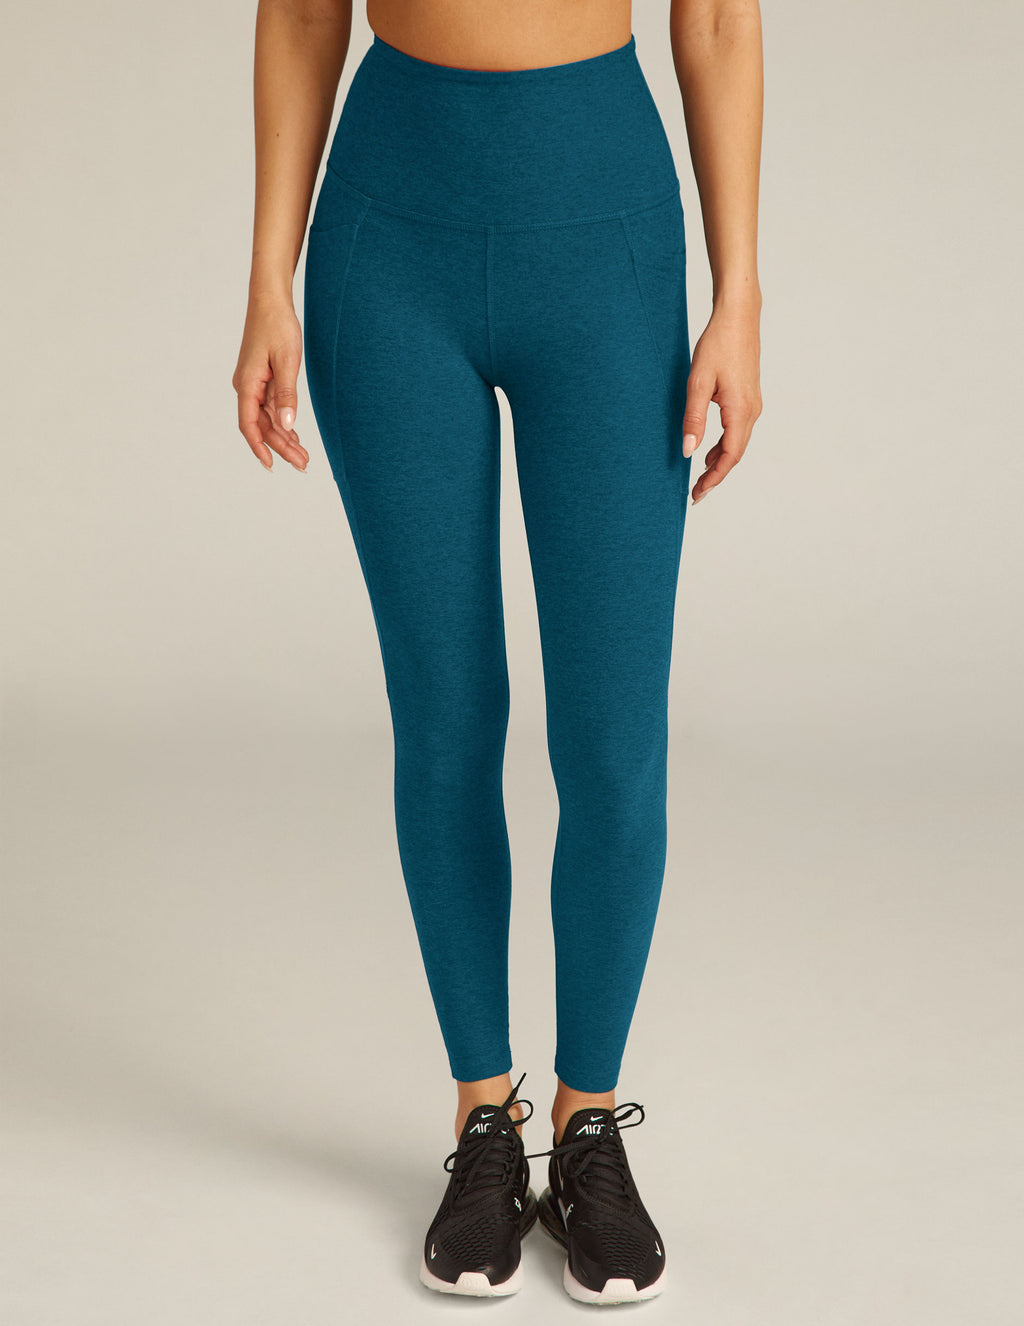 YUNAFFT Yoga Pants for Women Clearance Plus Size Womens Elastic Loose  Casual Cotton Soft Yoga Sports Dance Harem Pants 